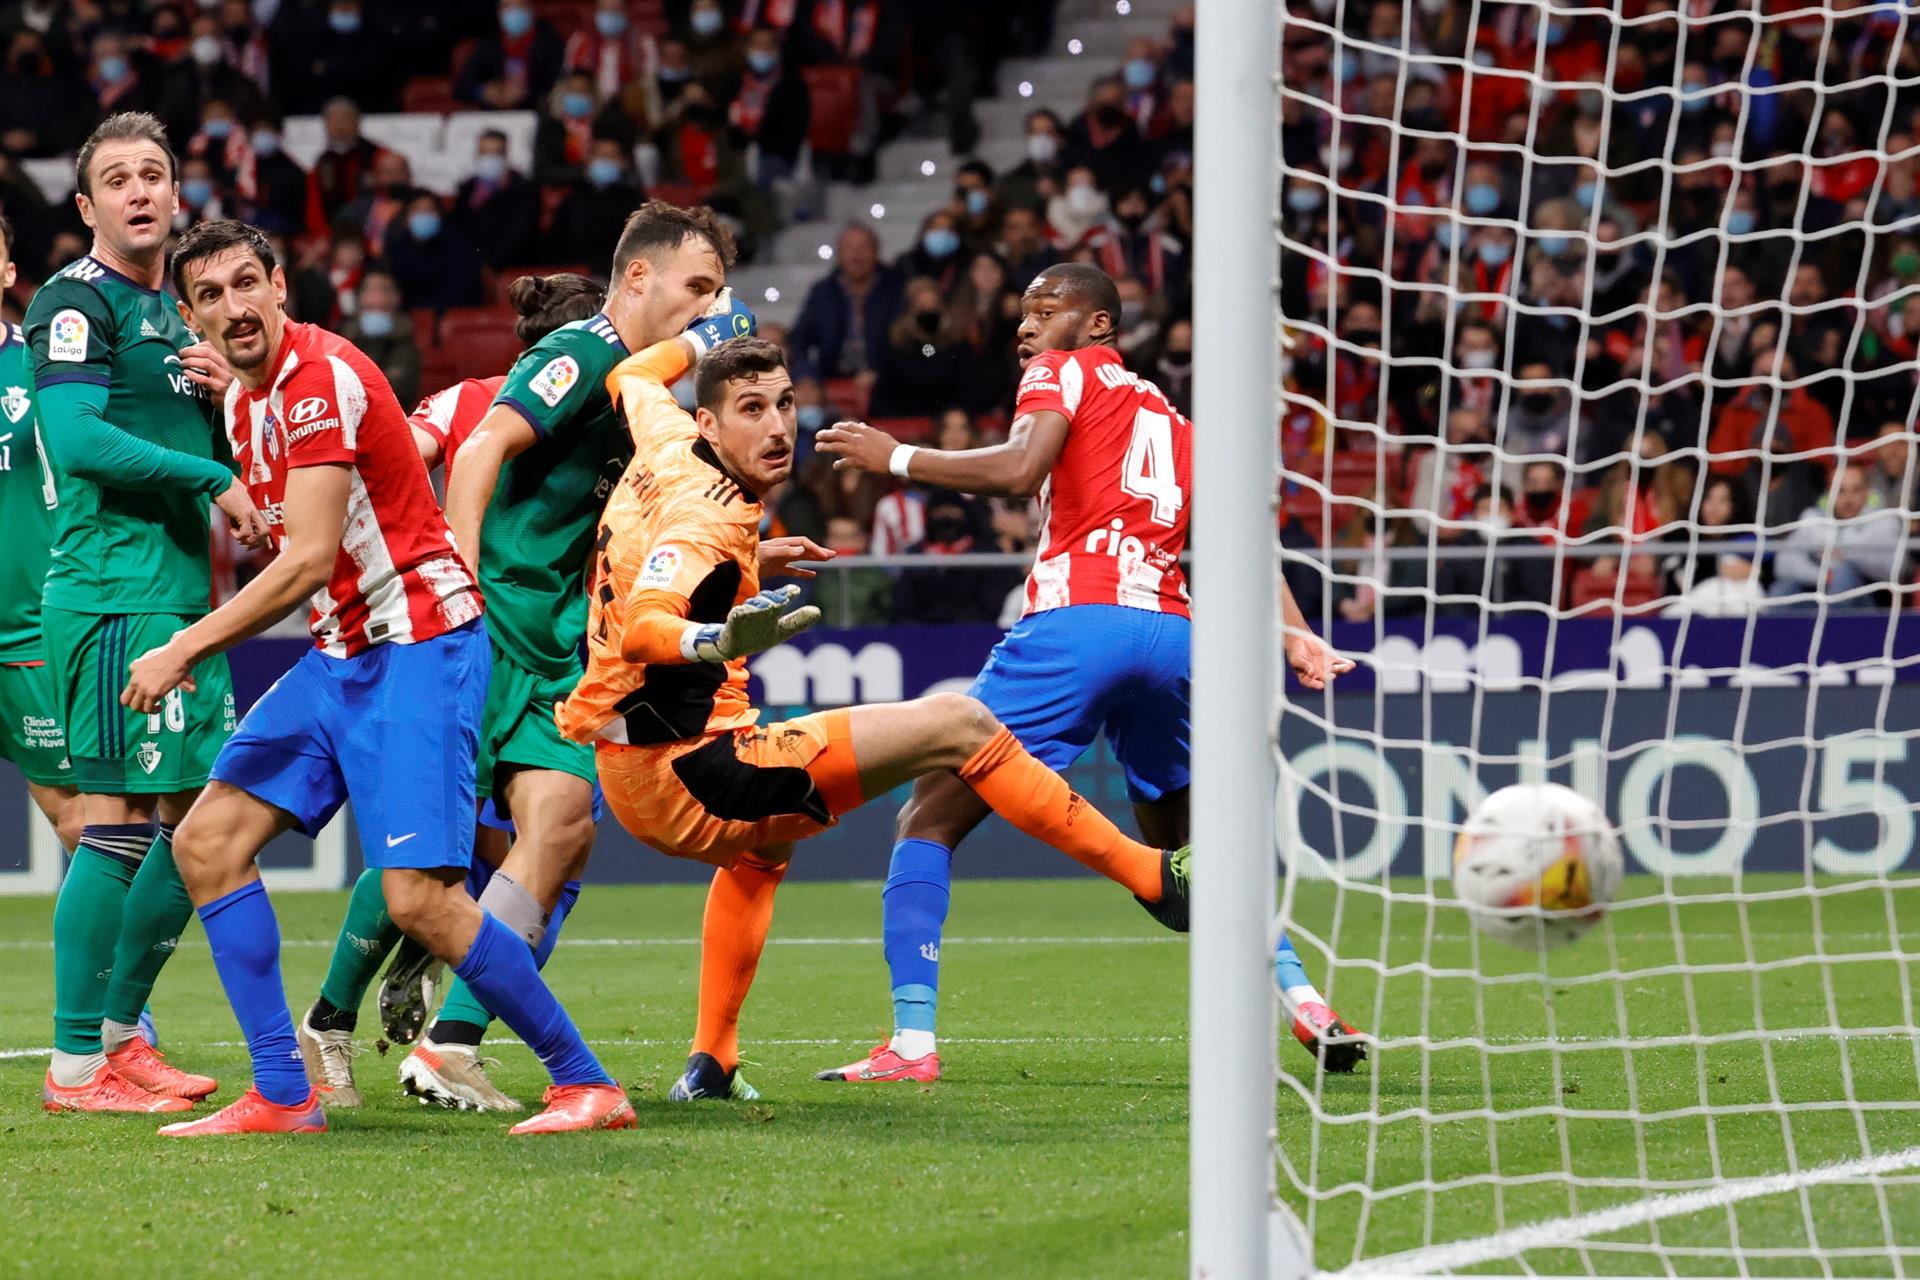 Un gol en el minuto 87 da la victoria al Atlético frente a Osasuna